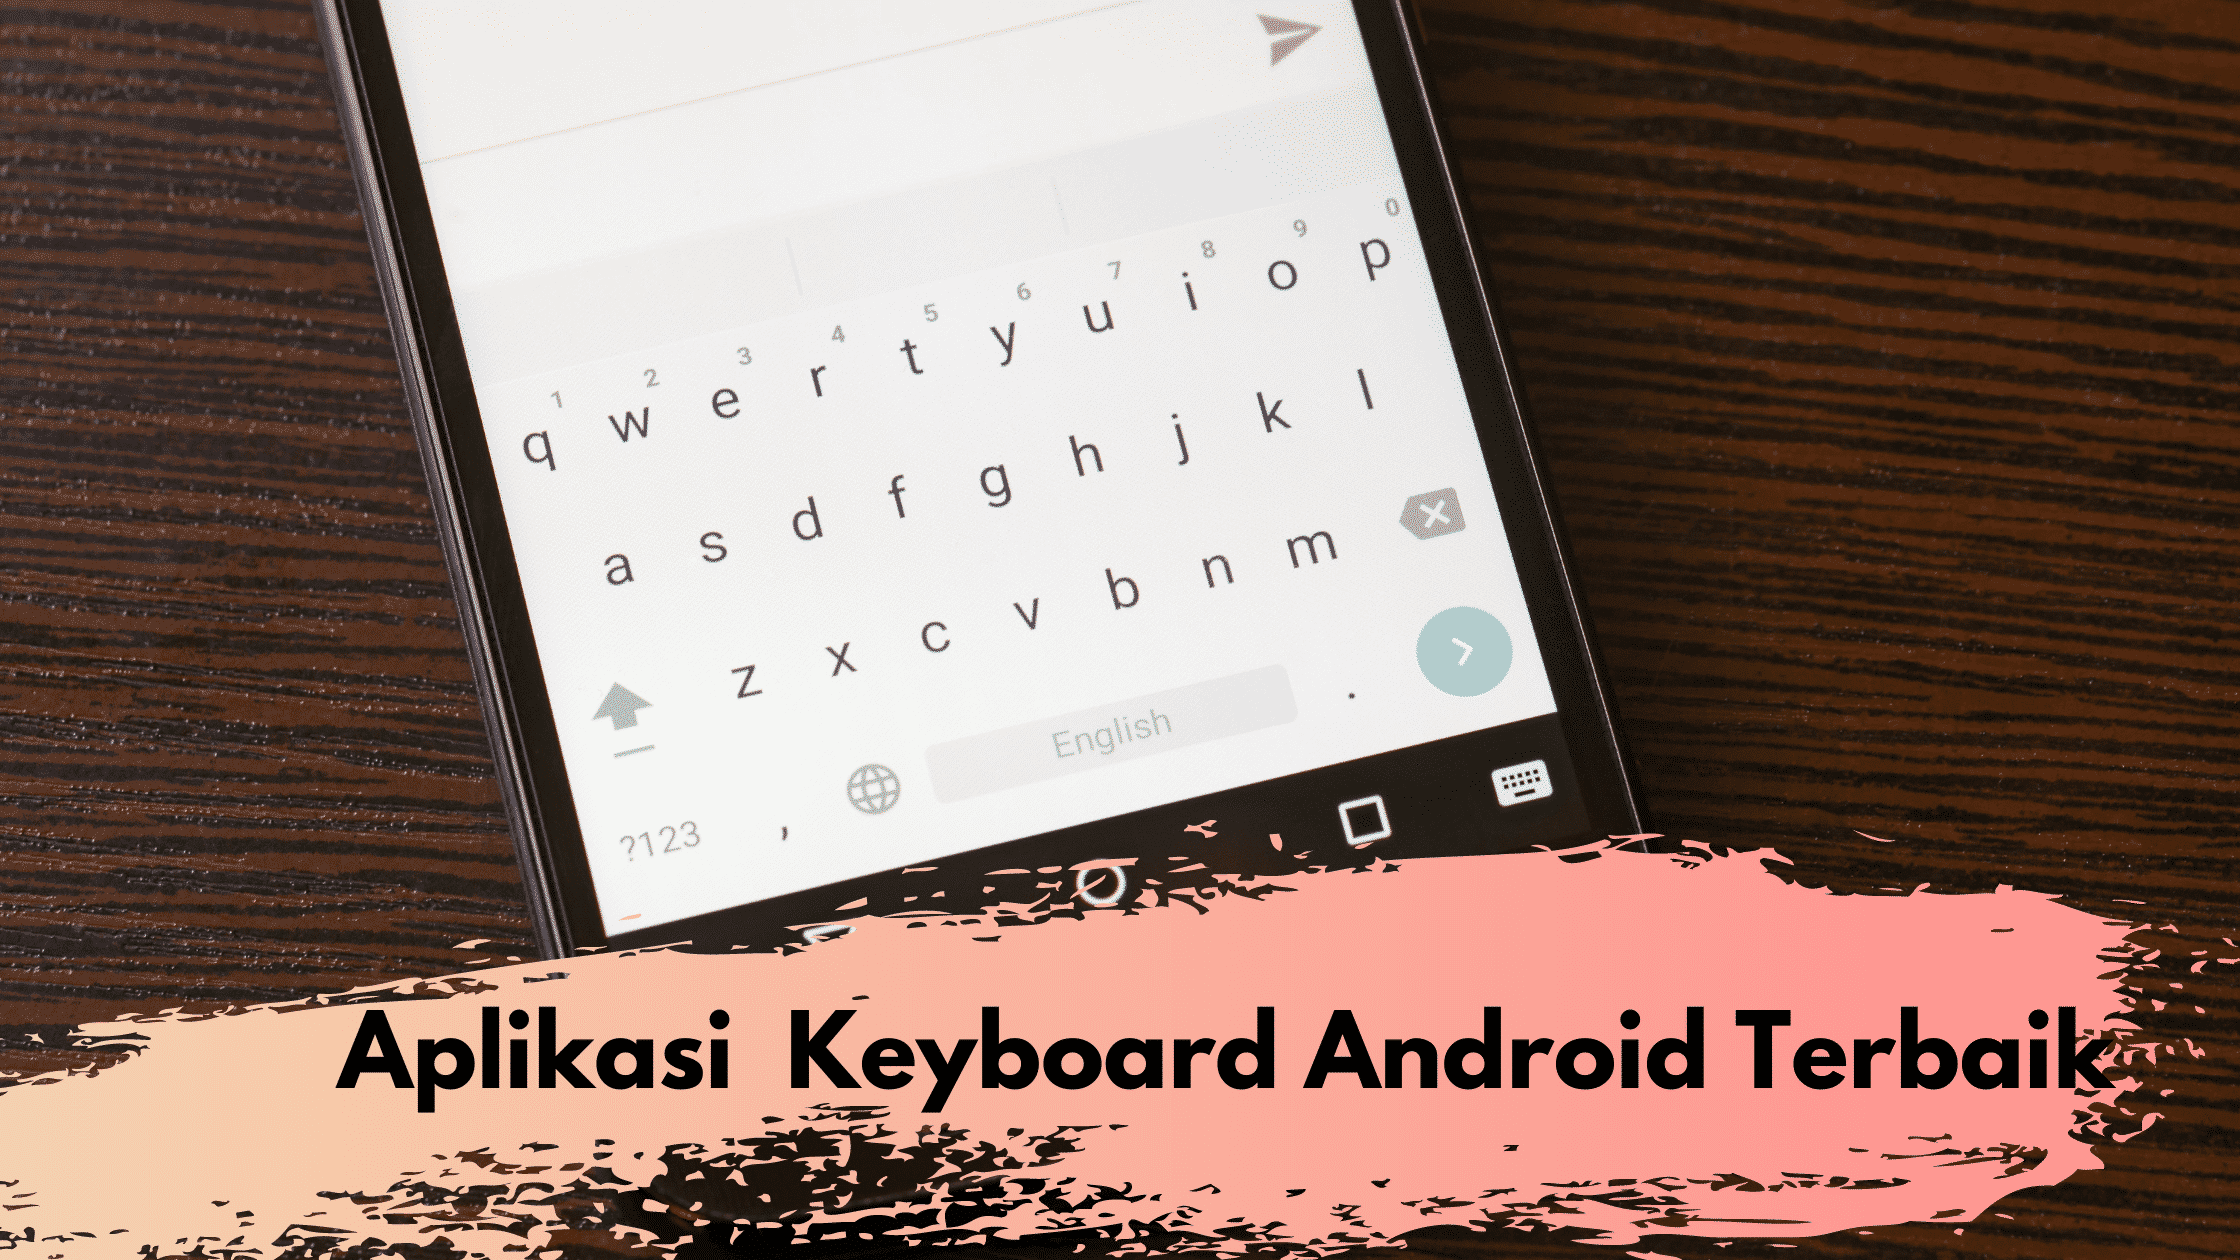 Aplikasi Keyboard Android Terbaik Apk. 5 Aplikasi Keyboard Android Terbaik 2021